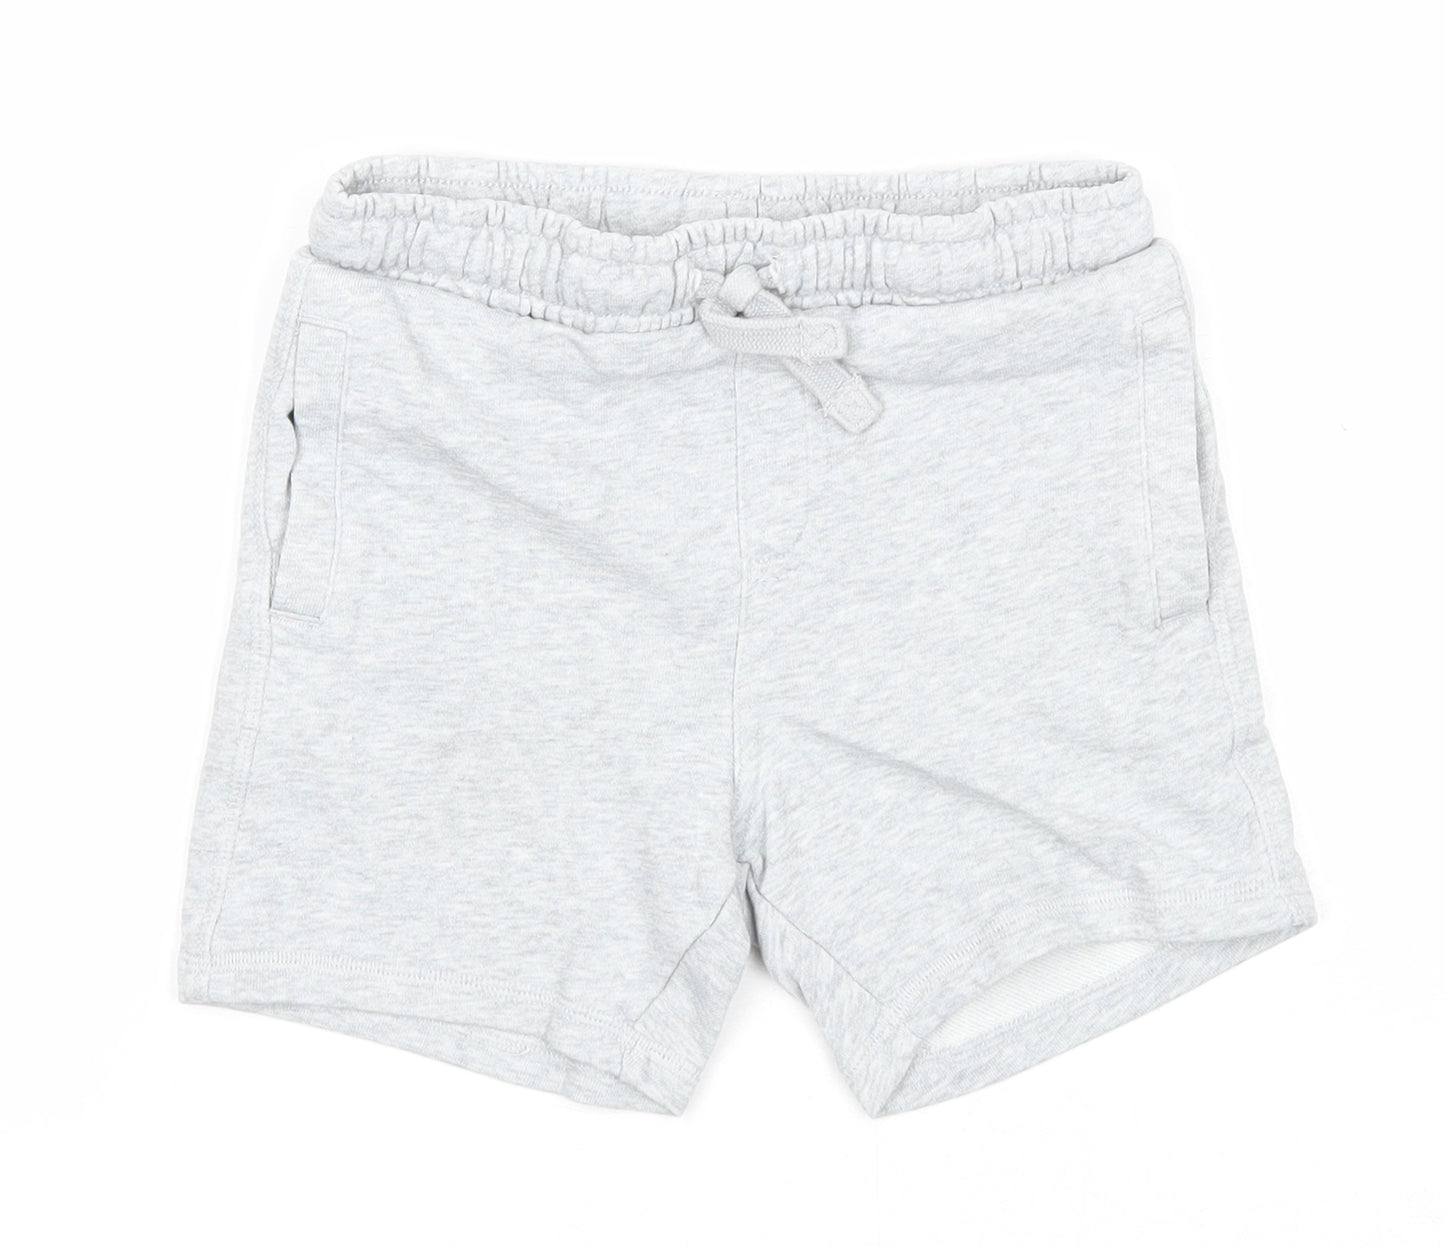 Marks and Spencer Boys Grey Cotton Sweat Shorts Size 5-6 Years Regular Drawstring